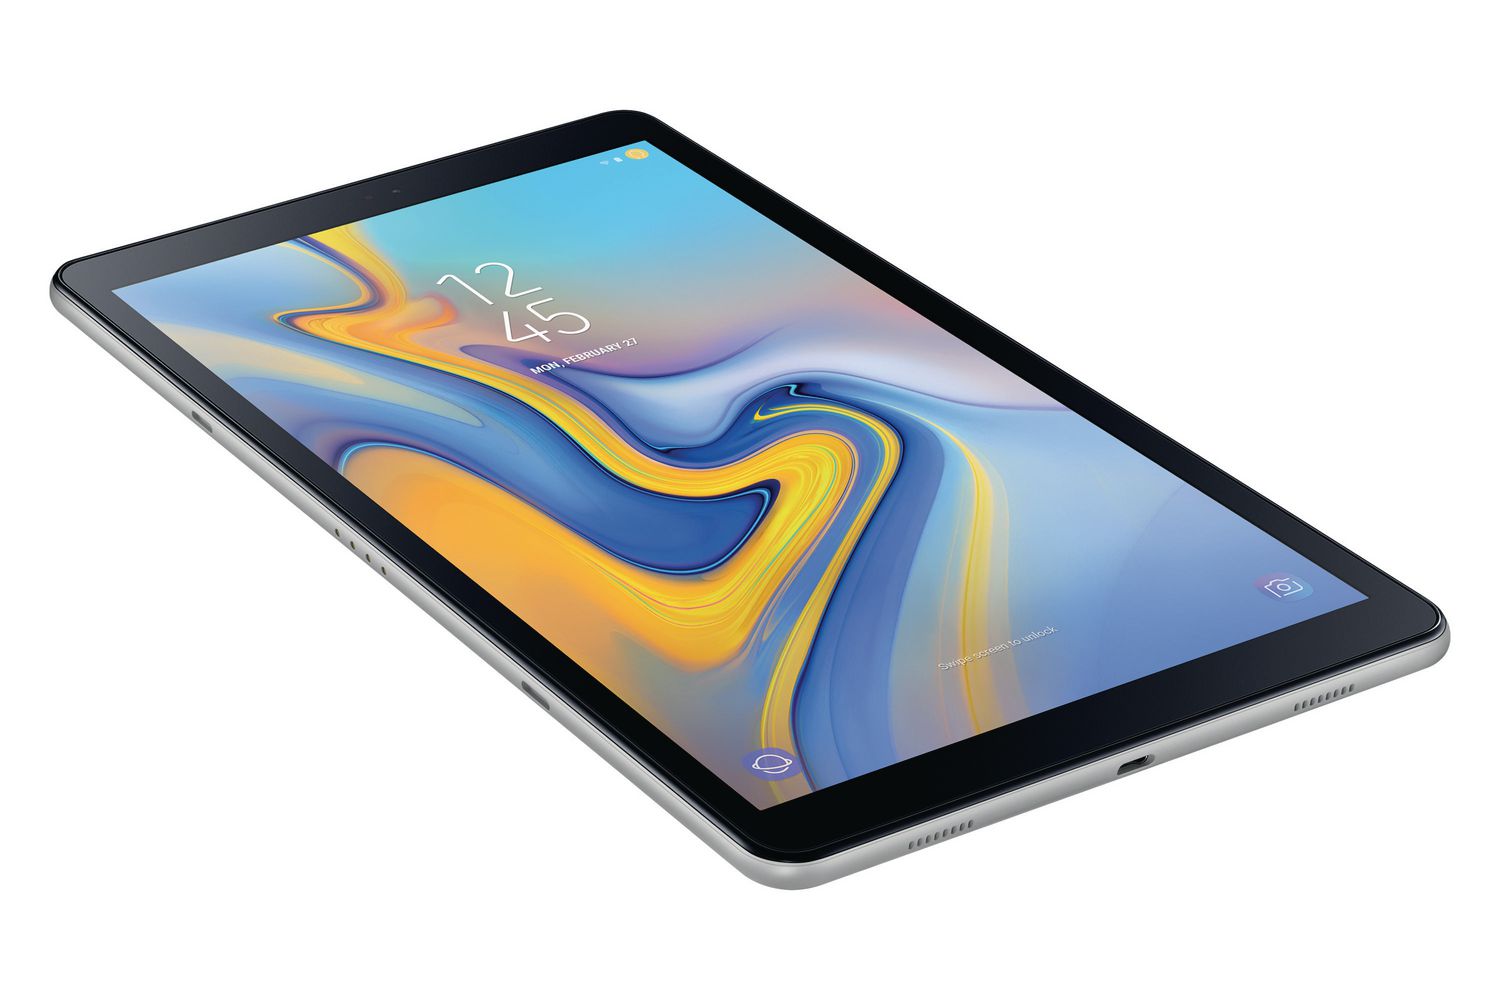 Tablette Galaxy Tab A 10,5 po de Samsung 